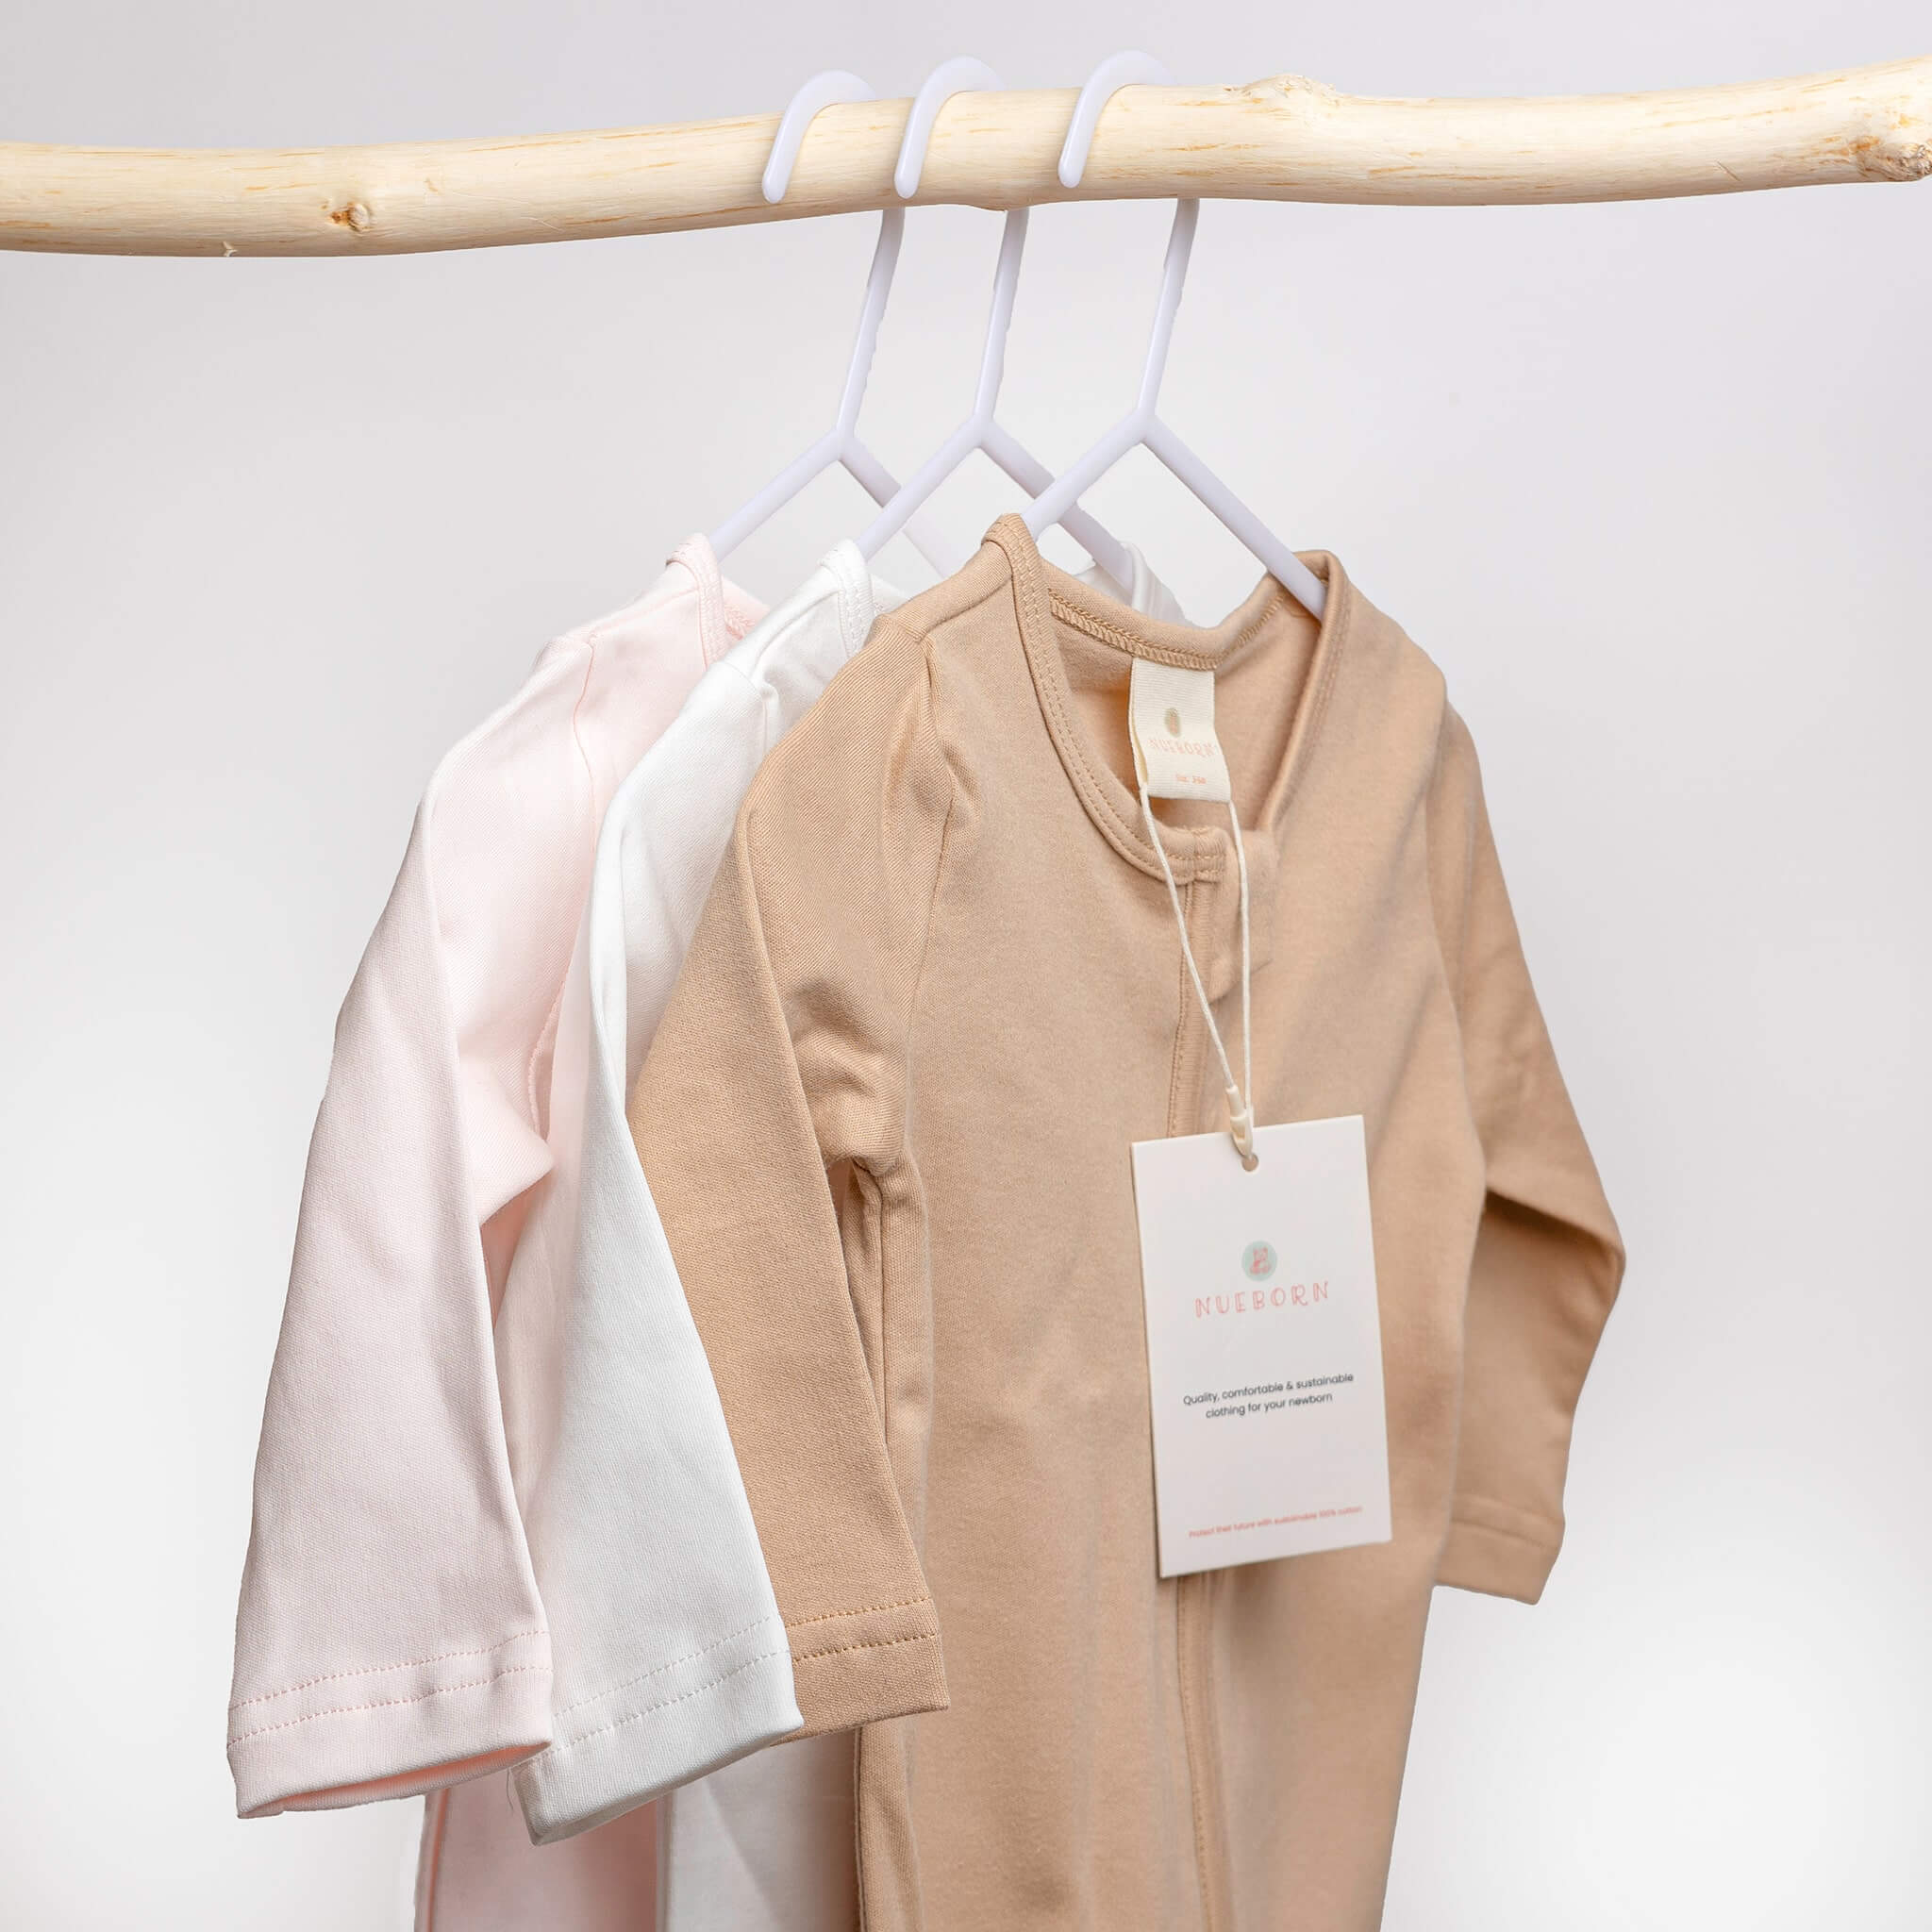 nueborn clothing colour range, khaki, pink and white